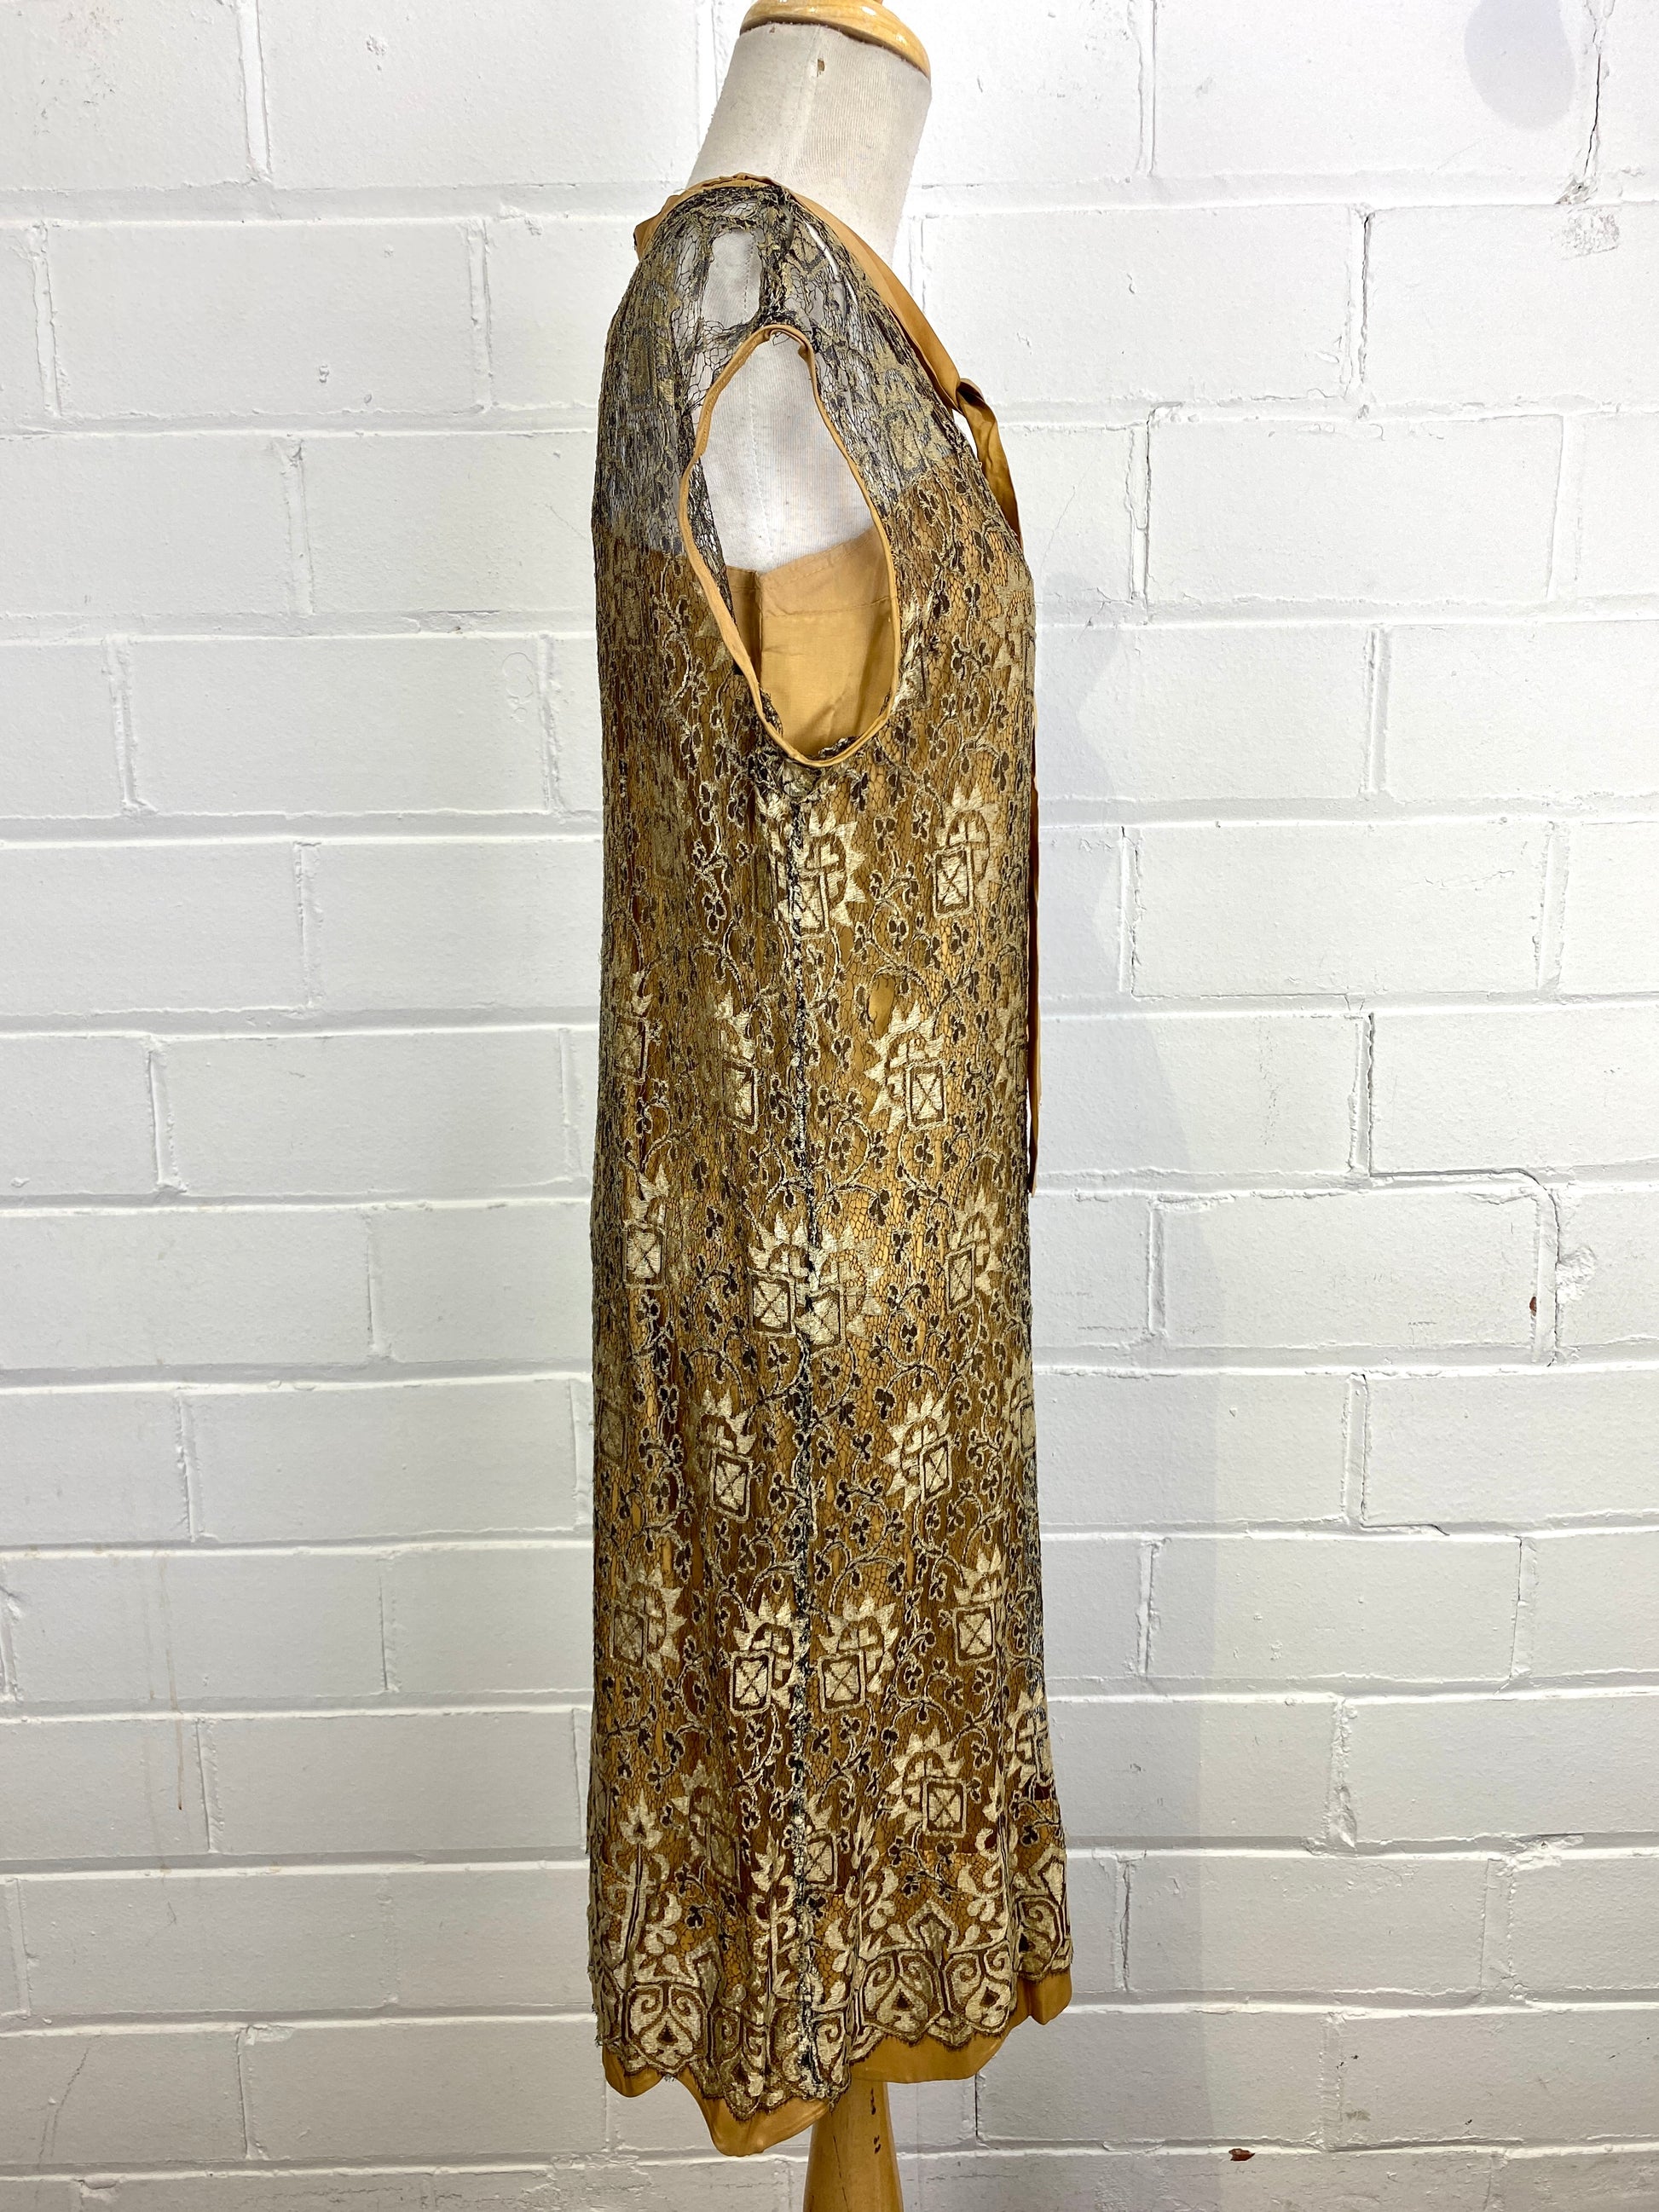 Vintage 1920s Gold Lace Cocktail Flapper Dress, As-Is